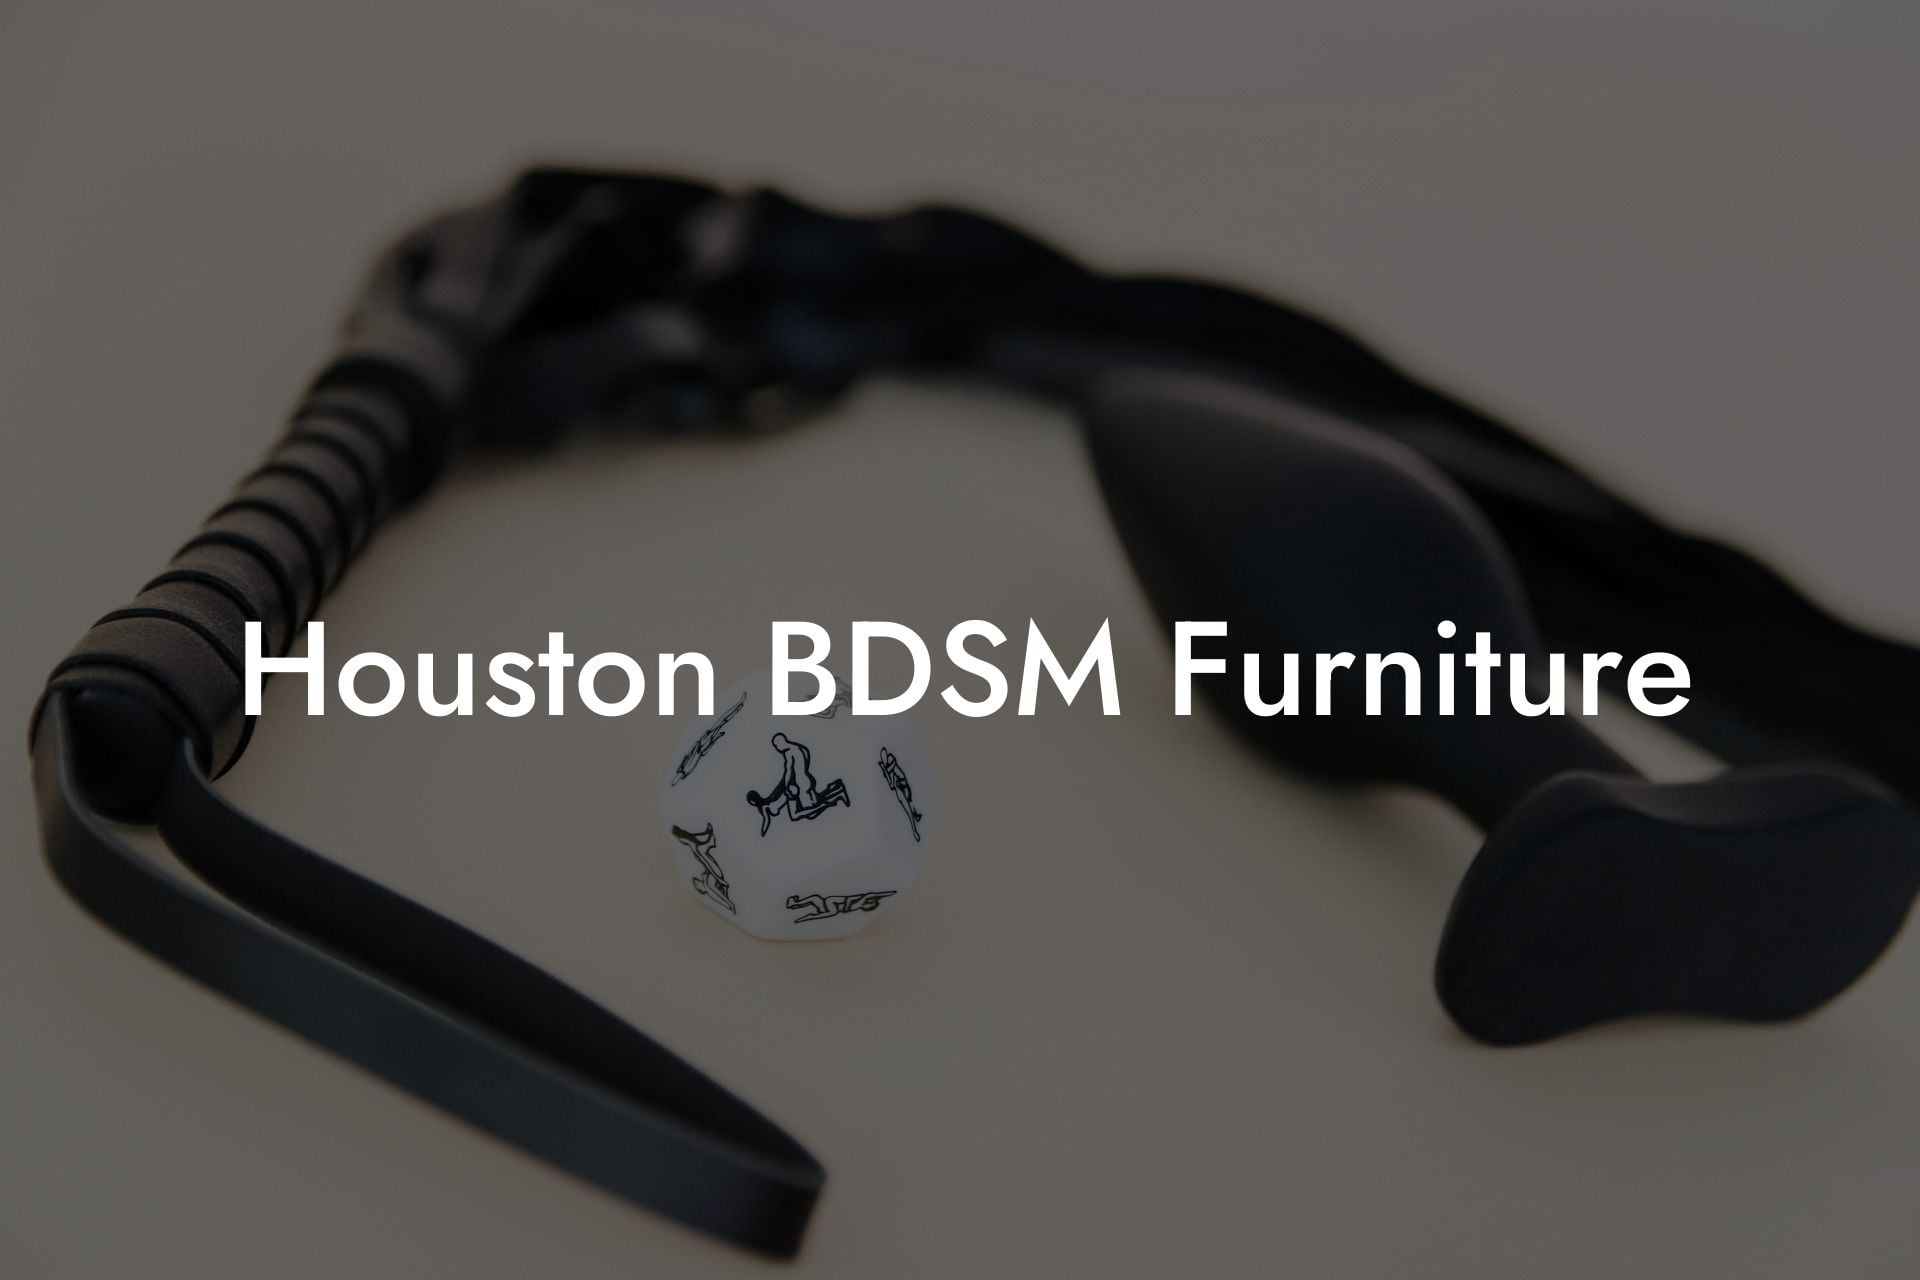 Houston BDSM Furniture